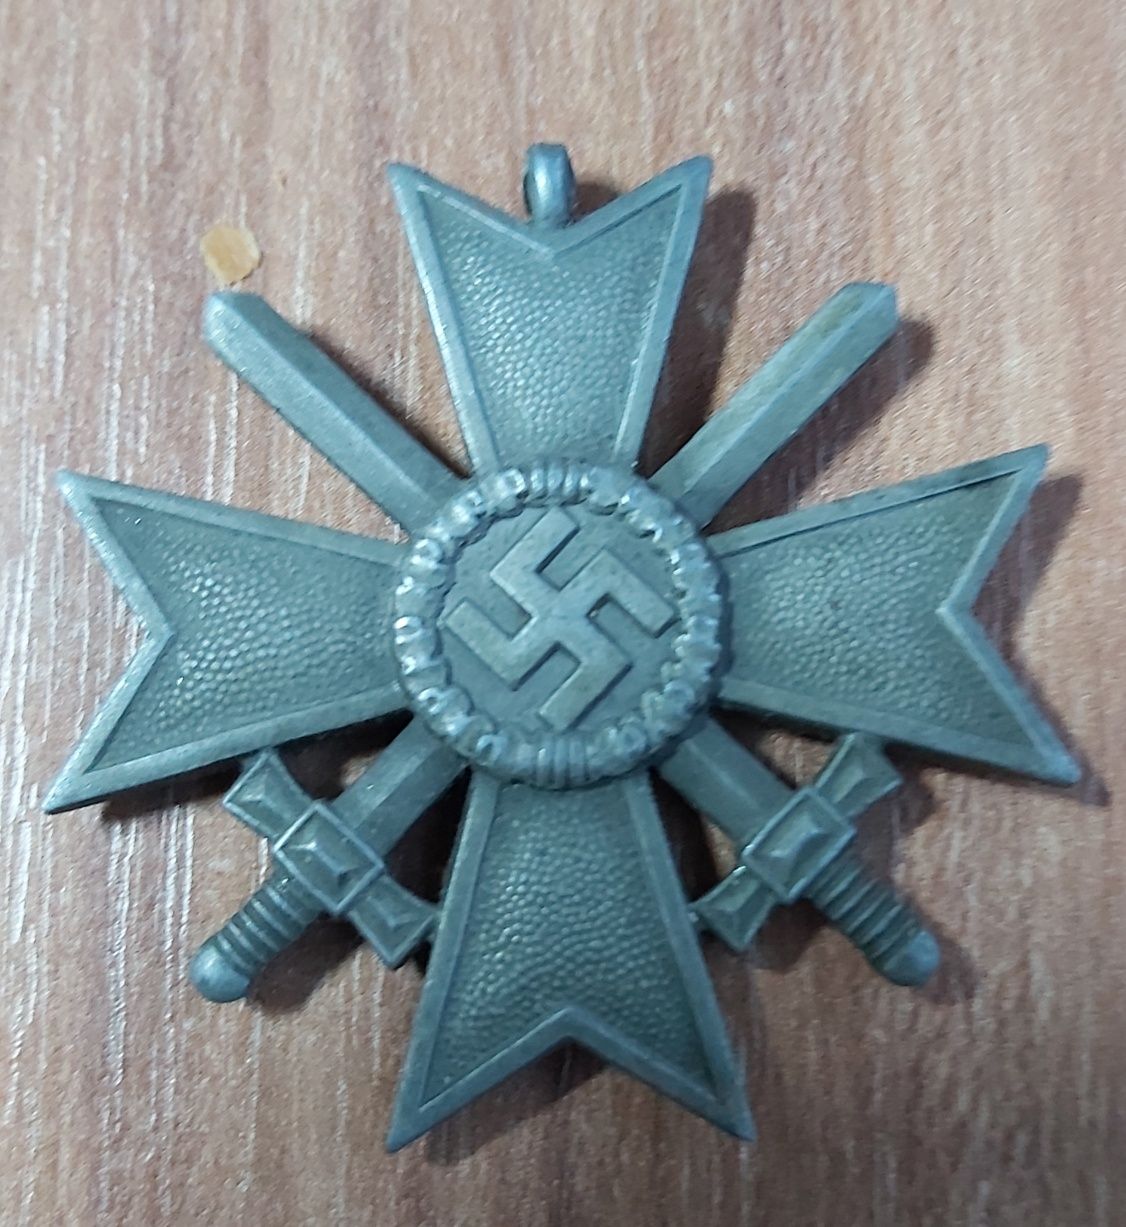 Ww2 medalie 1939 Germania